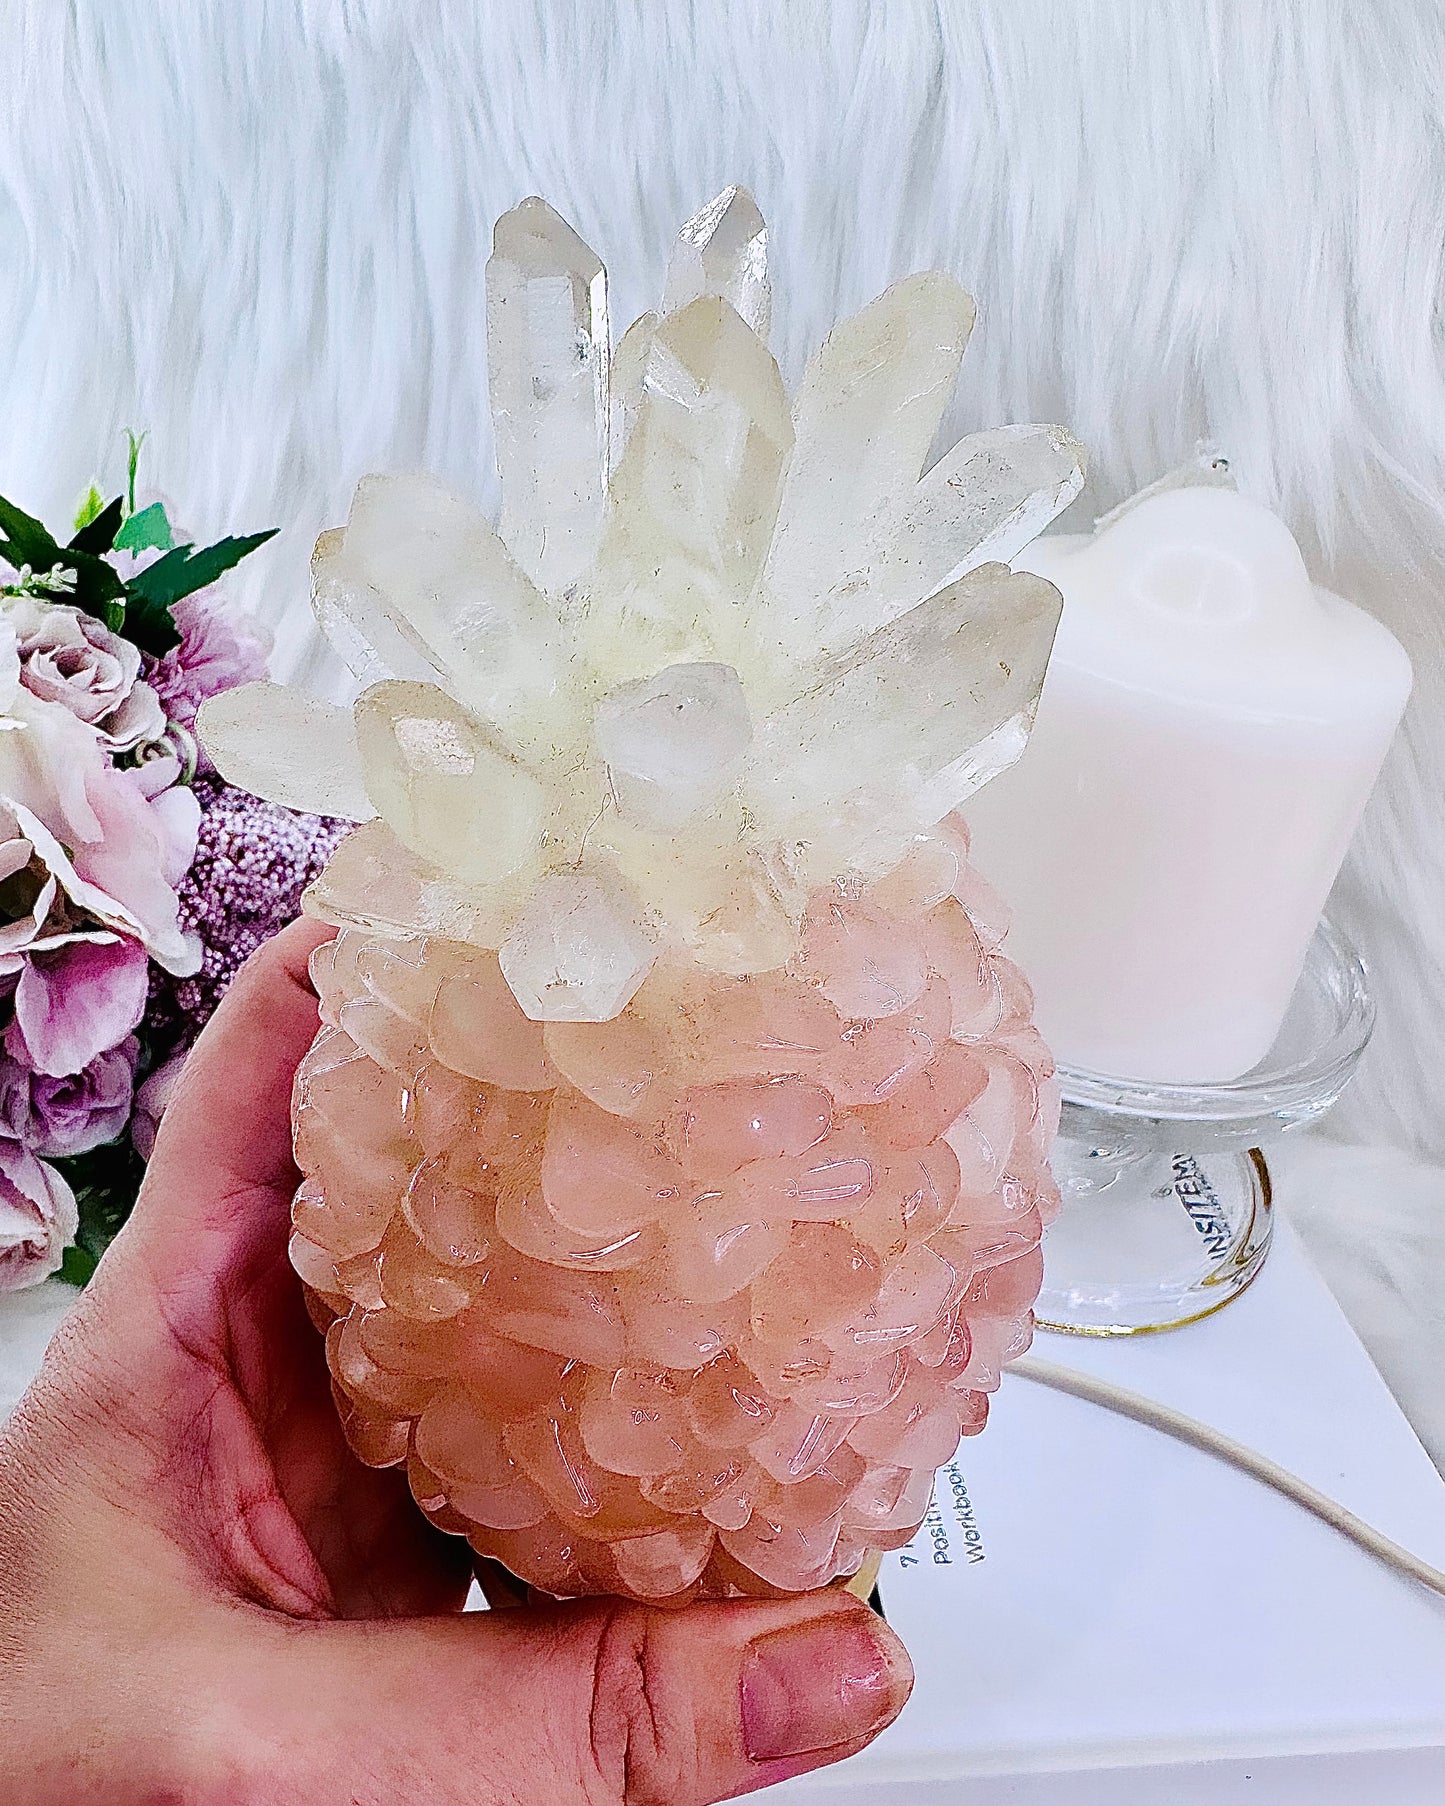 ⚜️ SALE ⚜️Beautiful Large 18cm Resin Filled Rose Quartz Pineapple Lamp with Clear Quartz Cluster